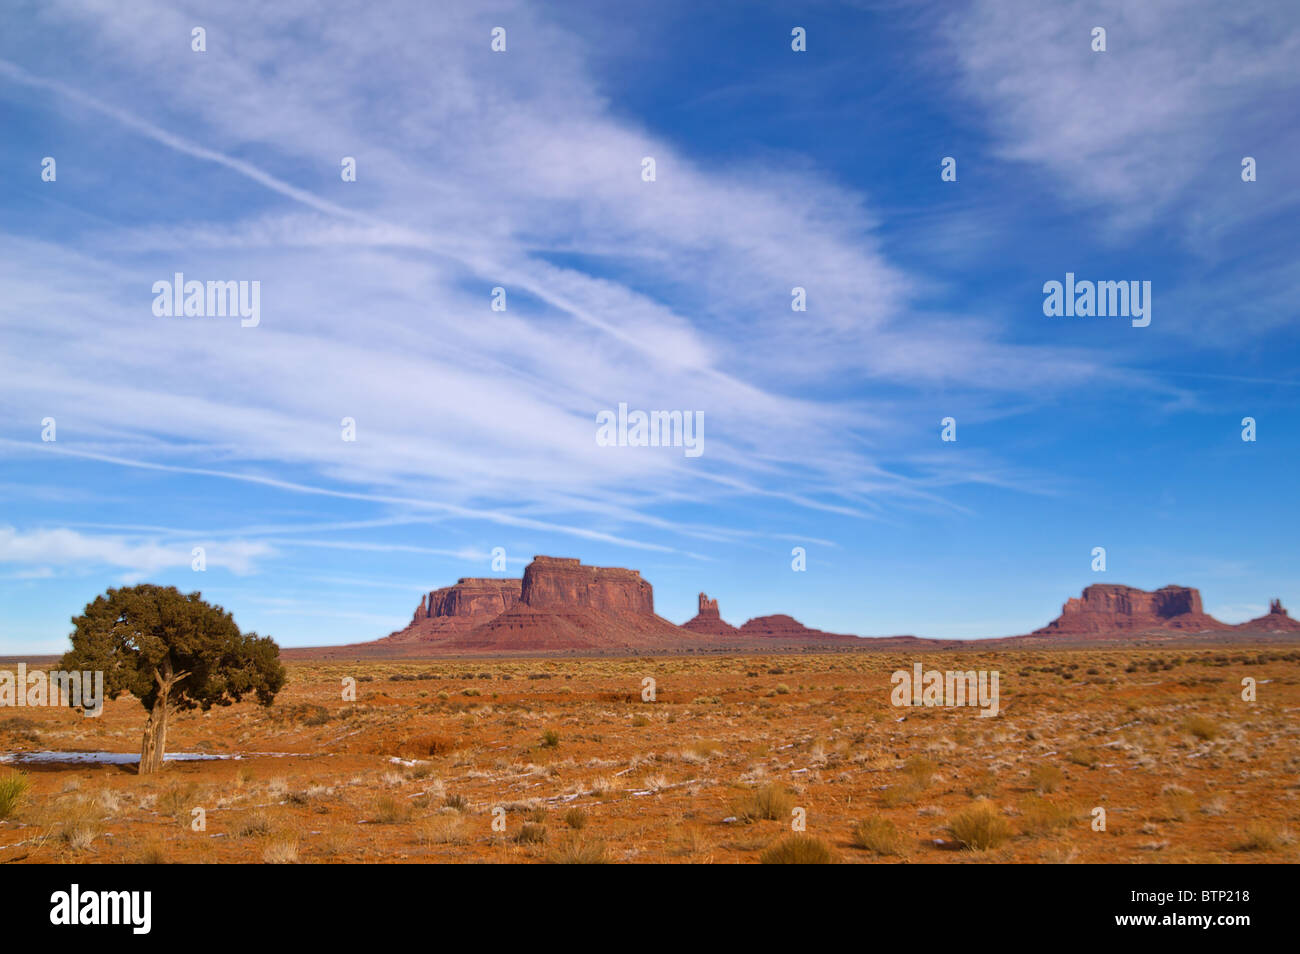 Monument Valley Navajo Tribal Park, Utah / Arizona, USA Banque D'Images